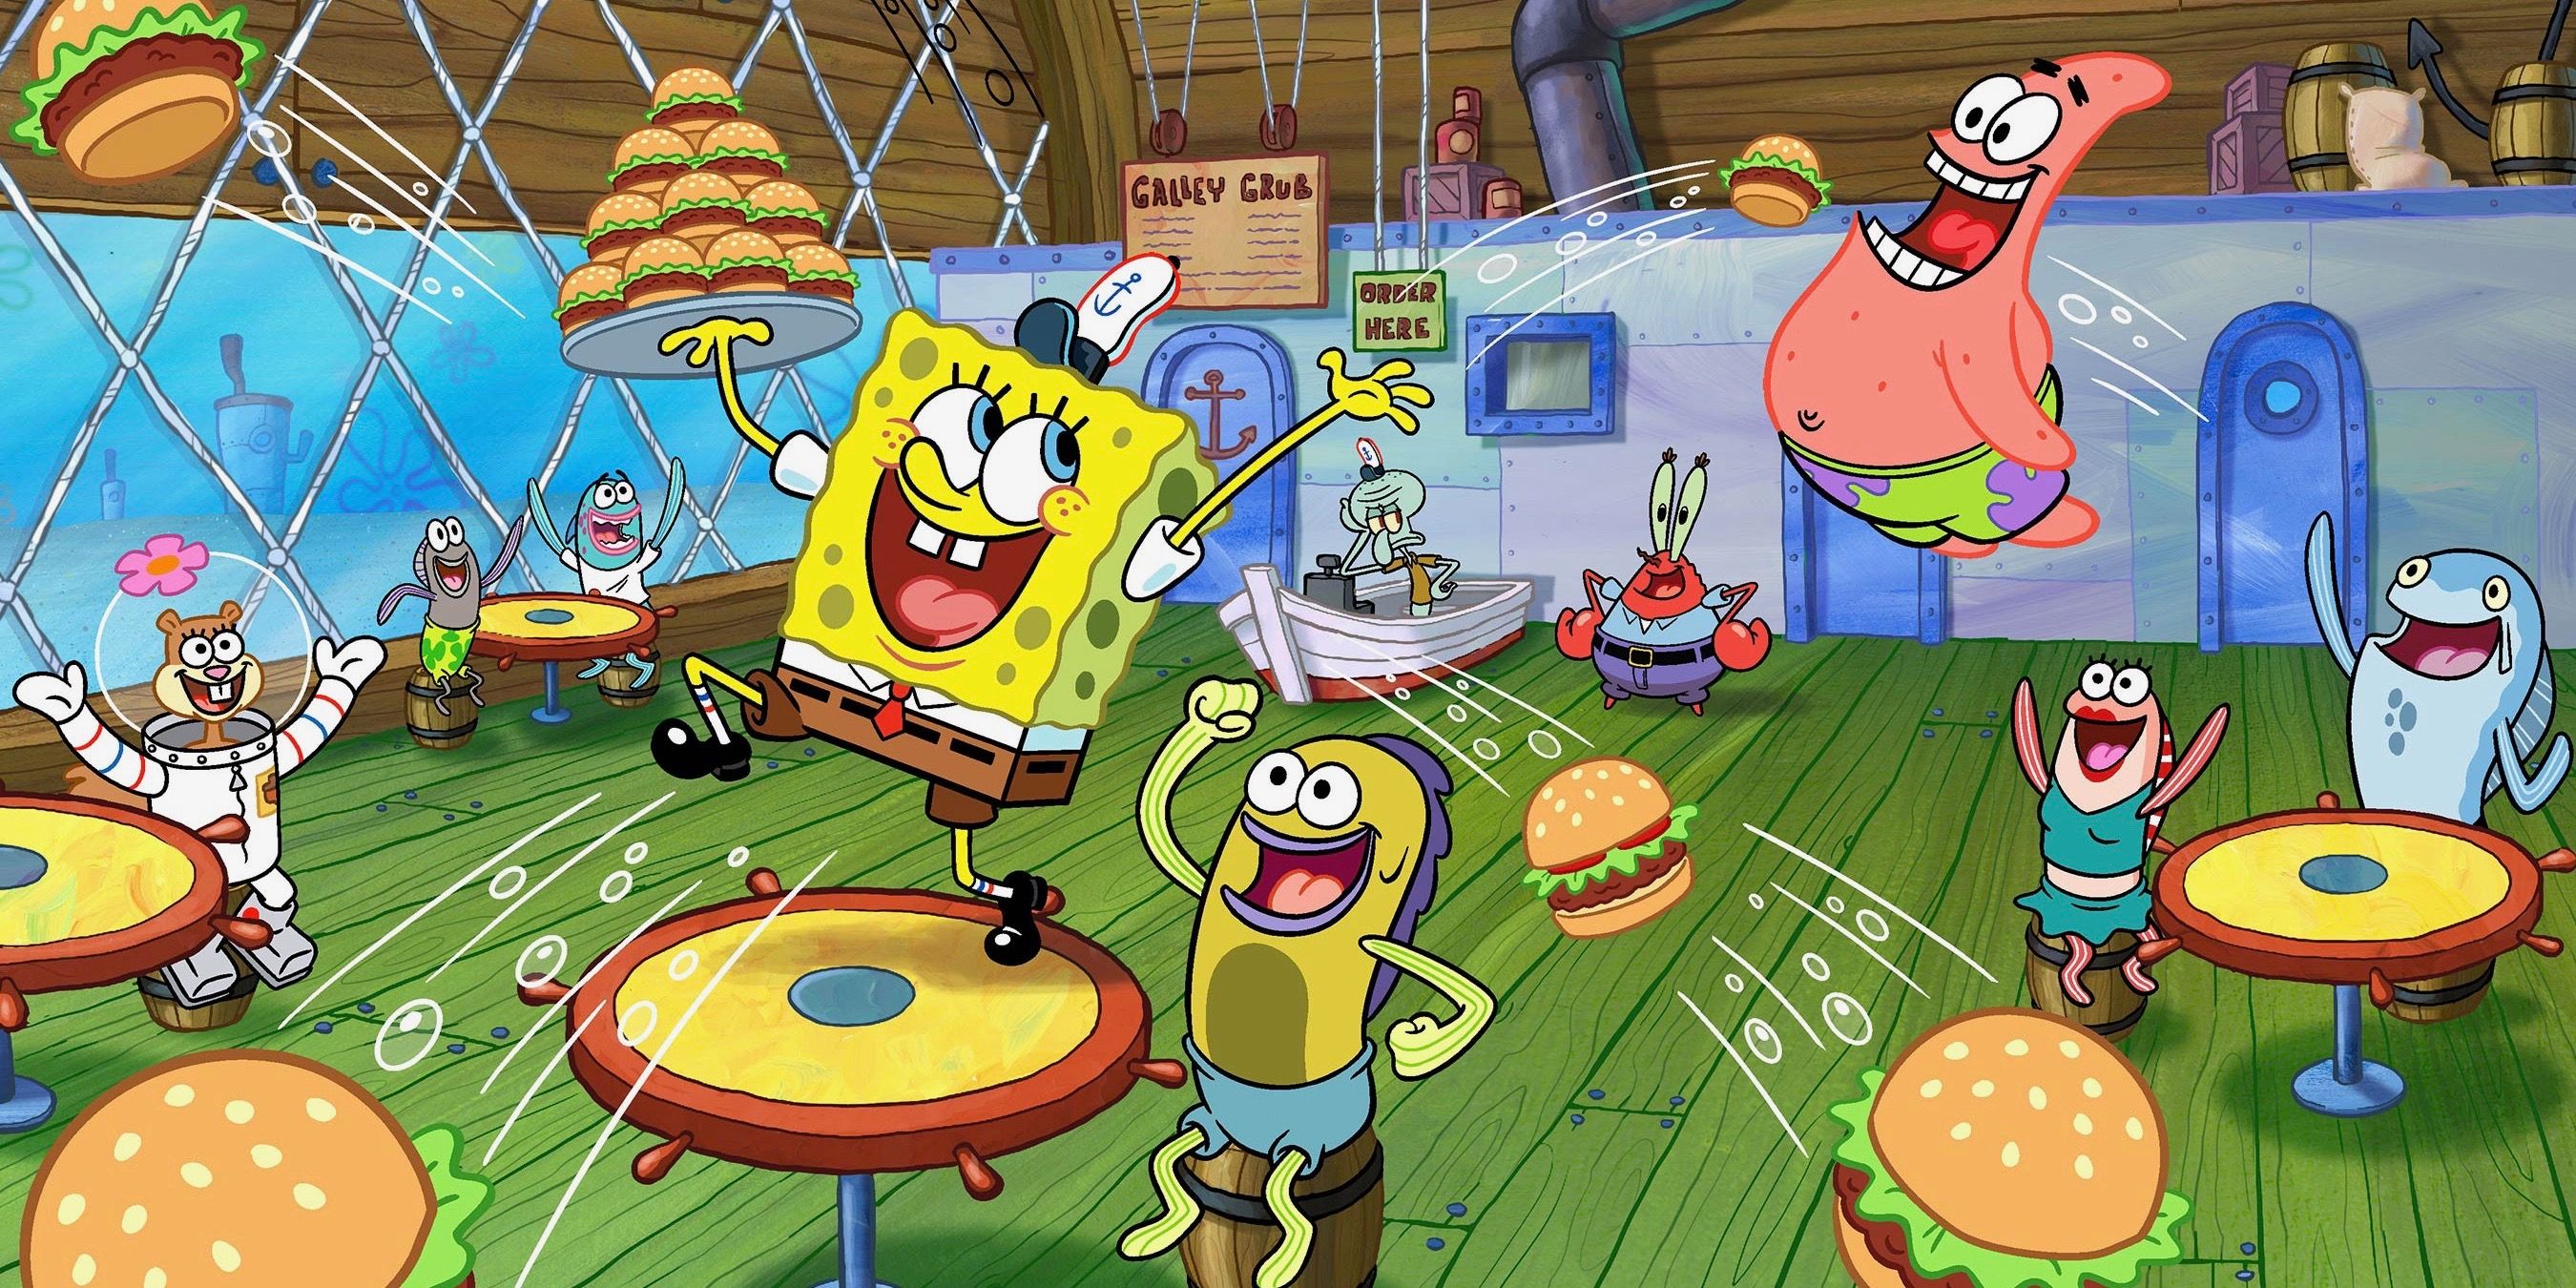 Spongebob Squarepants, Patrick, Sandy, Mr. Krabs, and Squidward